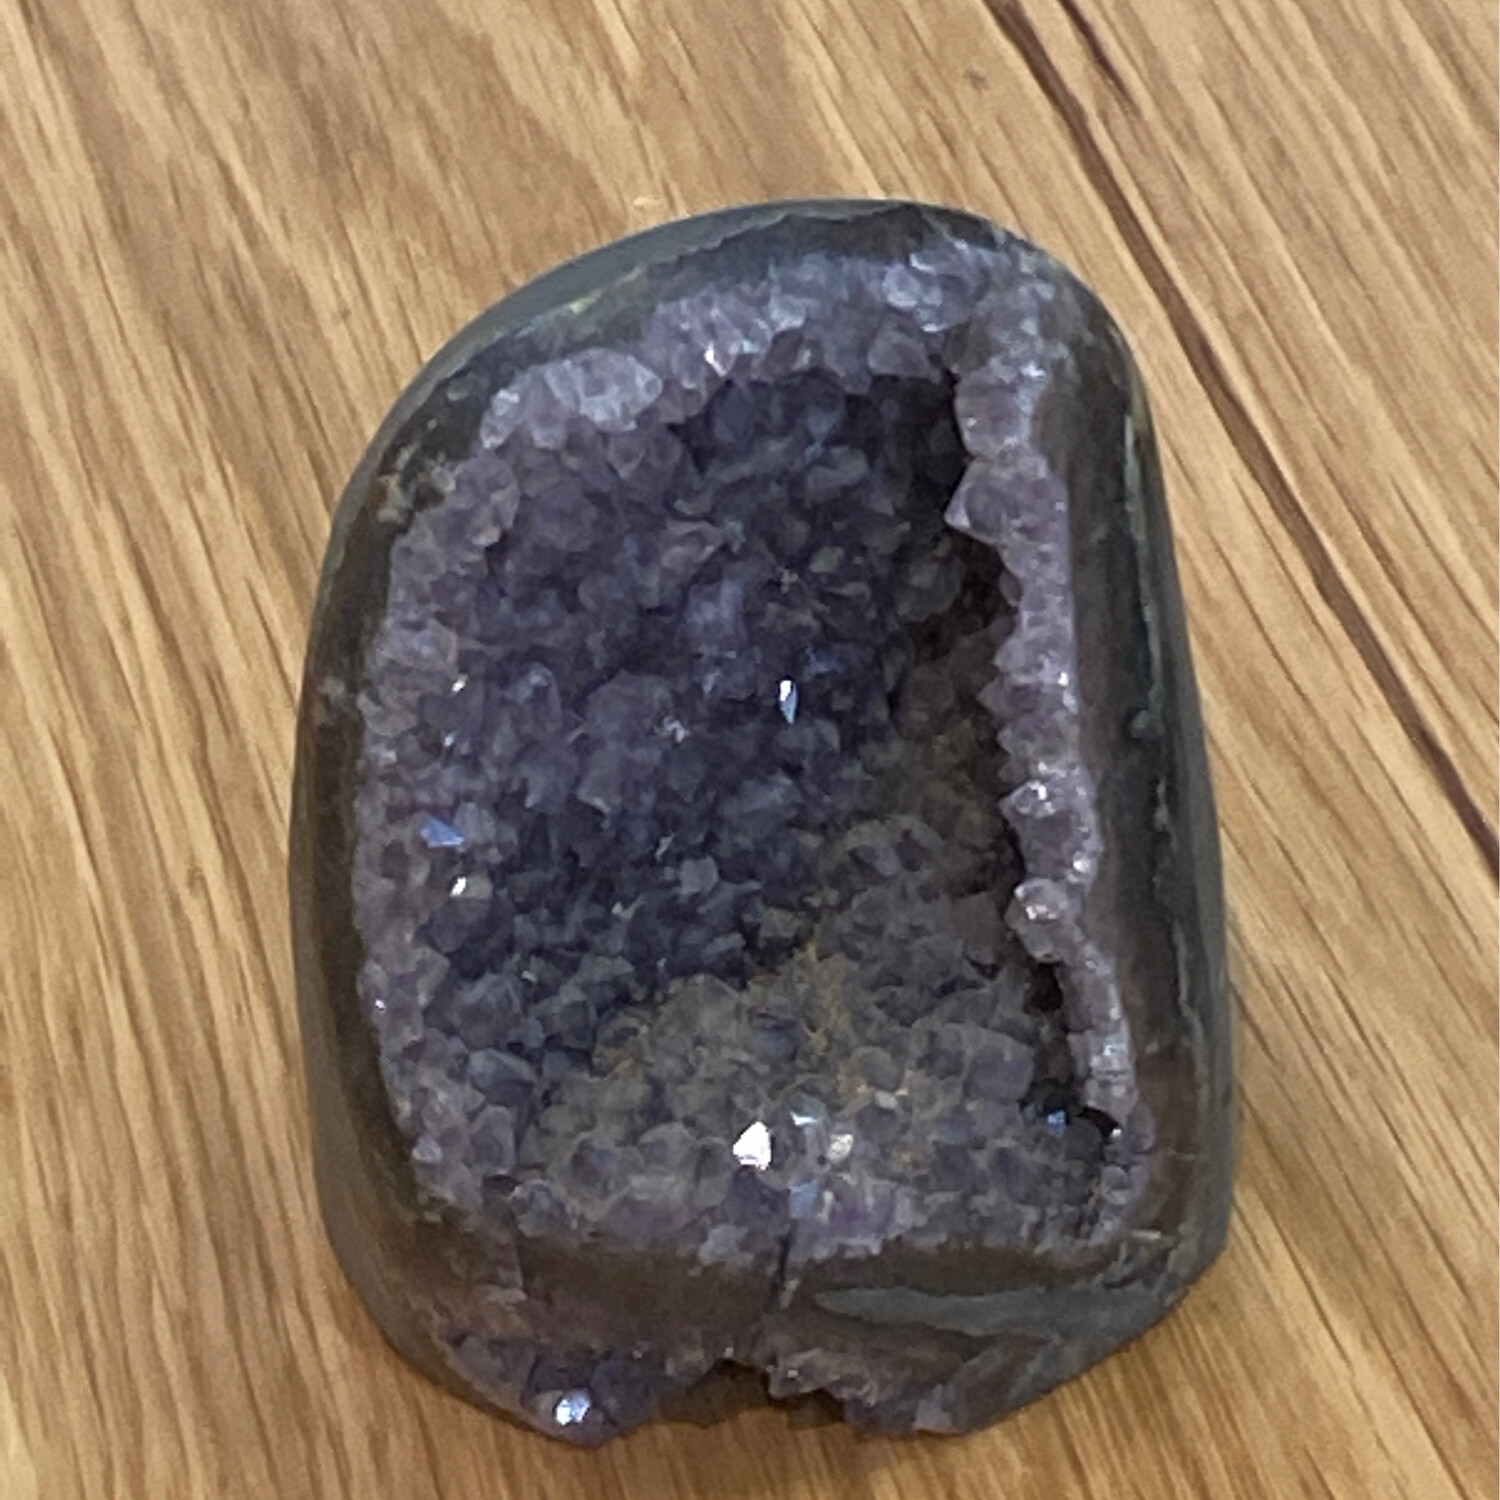 Amethyst Geode 